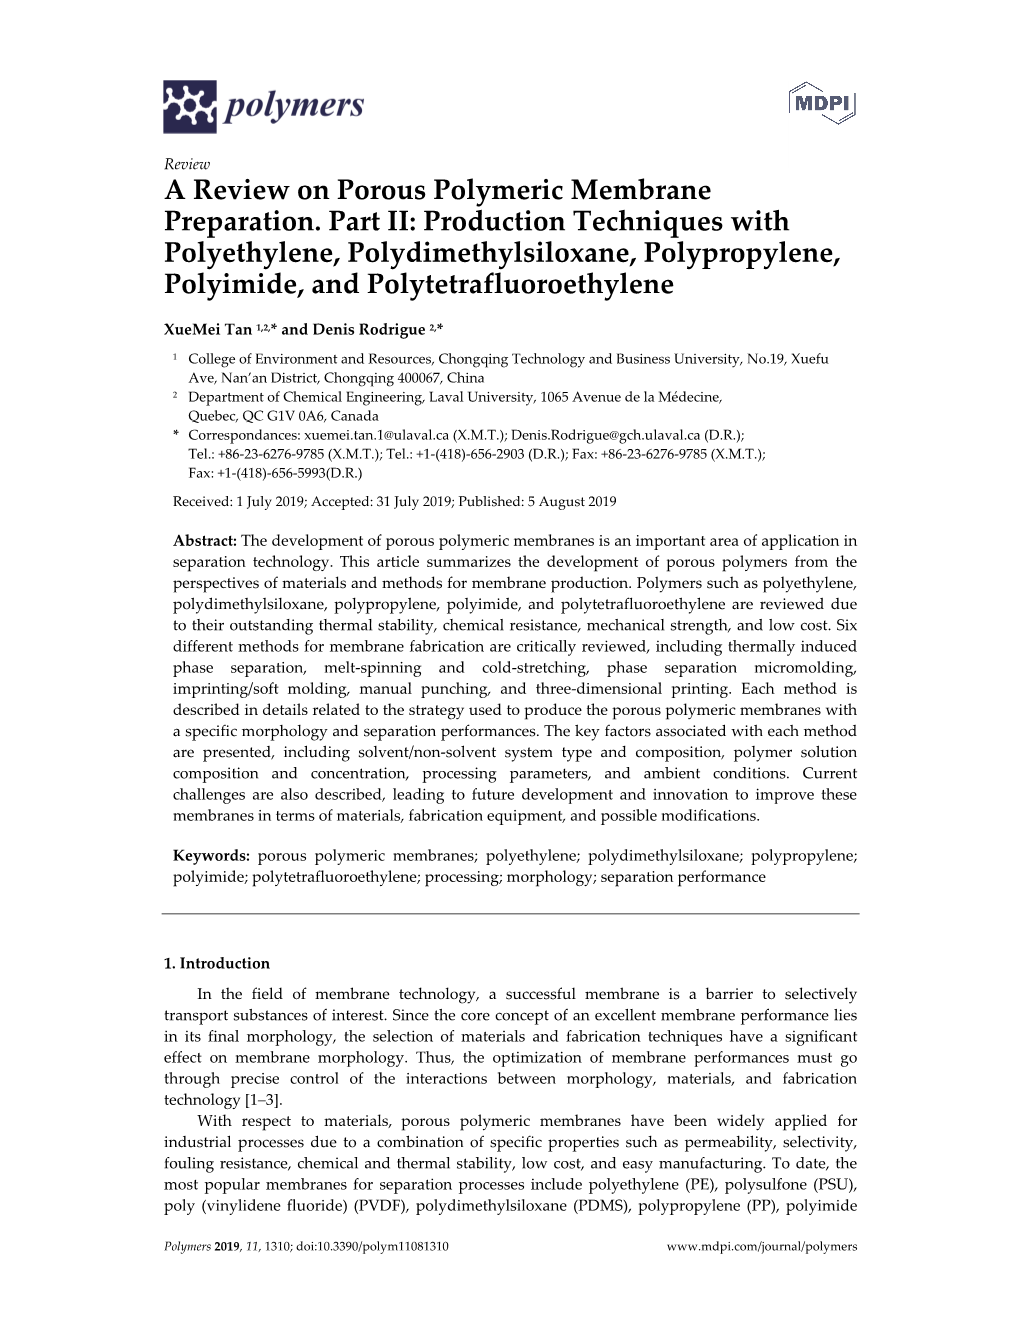 A Review on Porous Polymeric Membrane Preparation. Part II